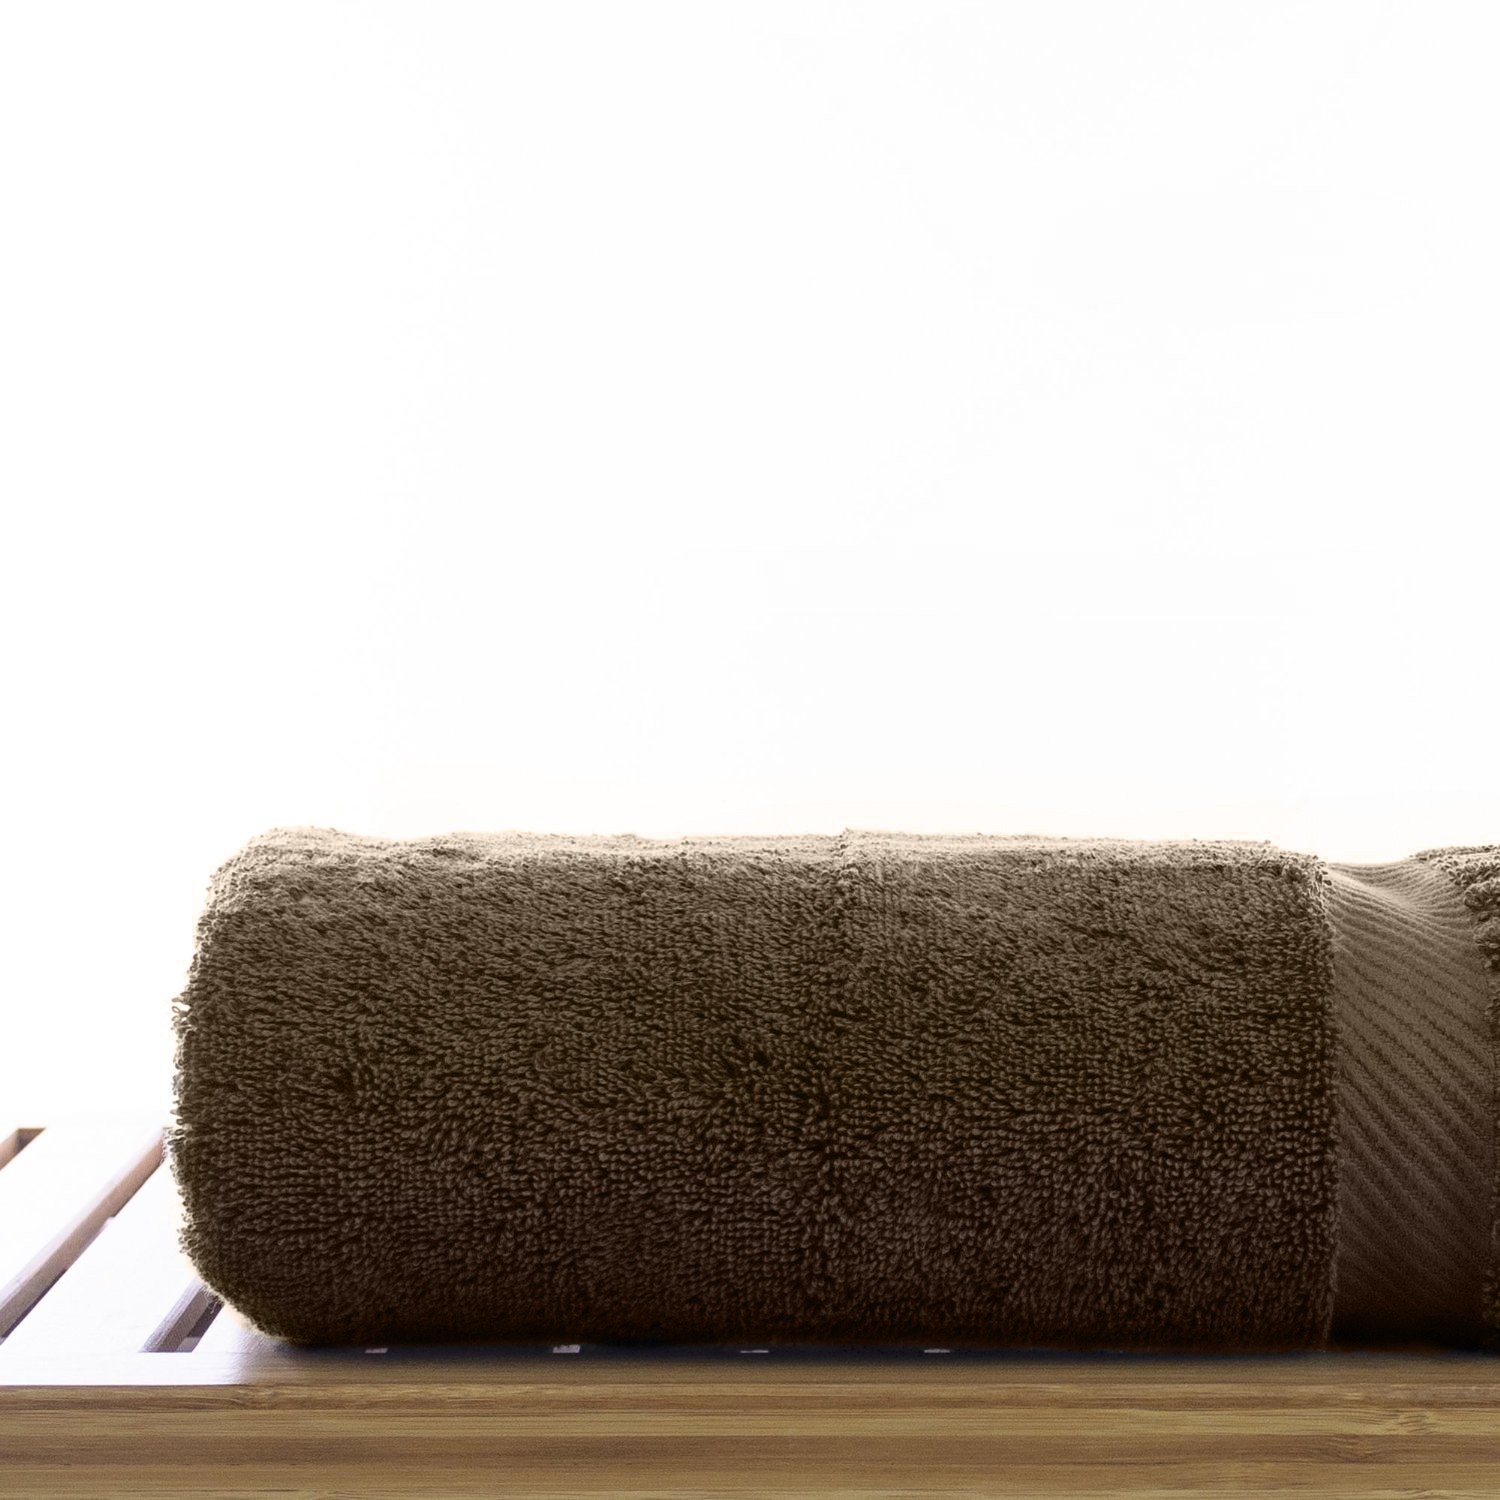 30" x 58" - 18 lbs/doz - %100 Turkish Cotton Cocoa Bath Towel - Piano Border-Robemart.com